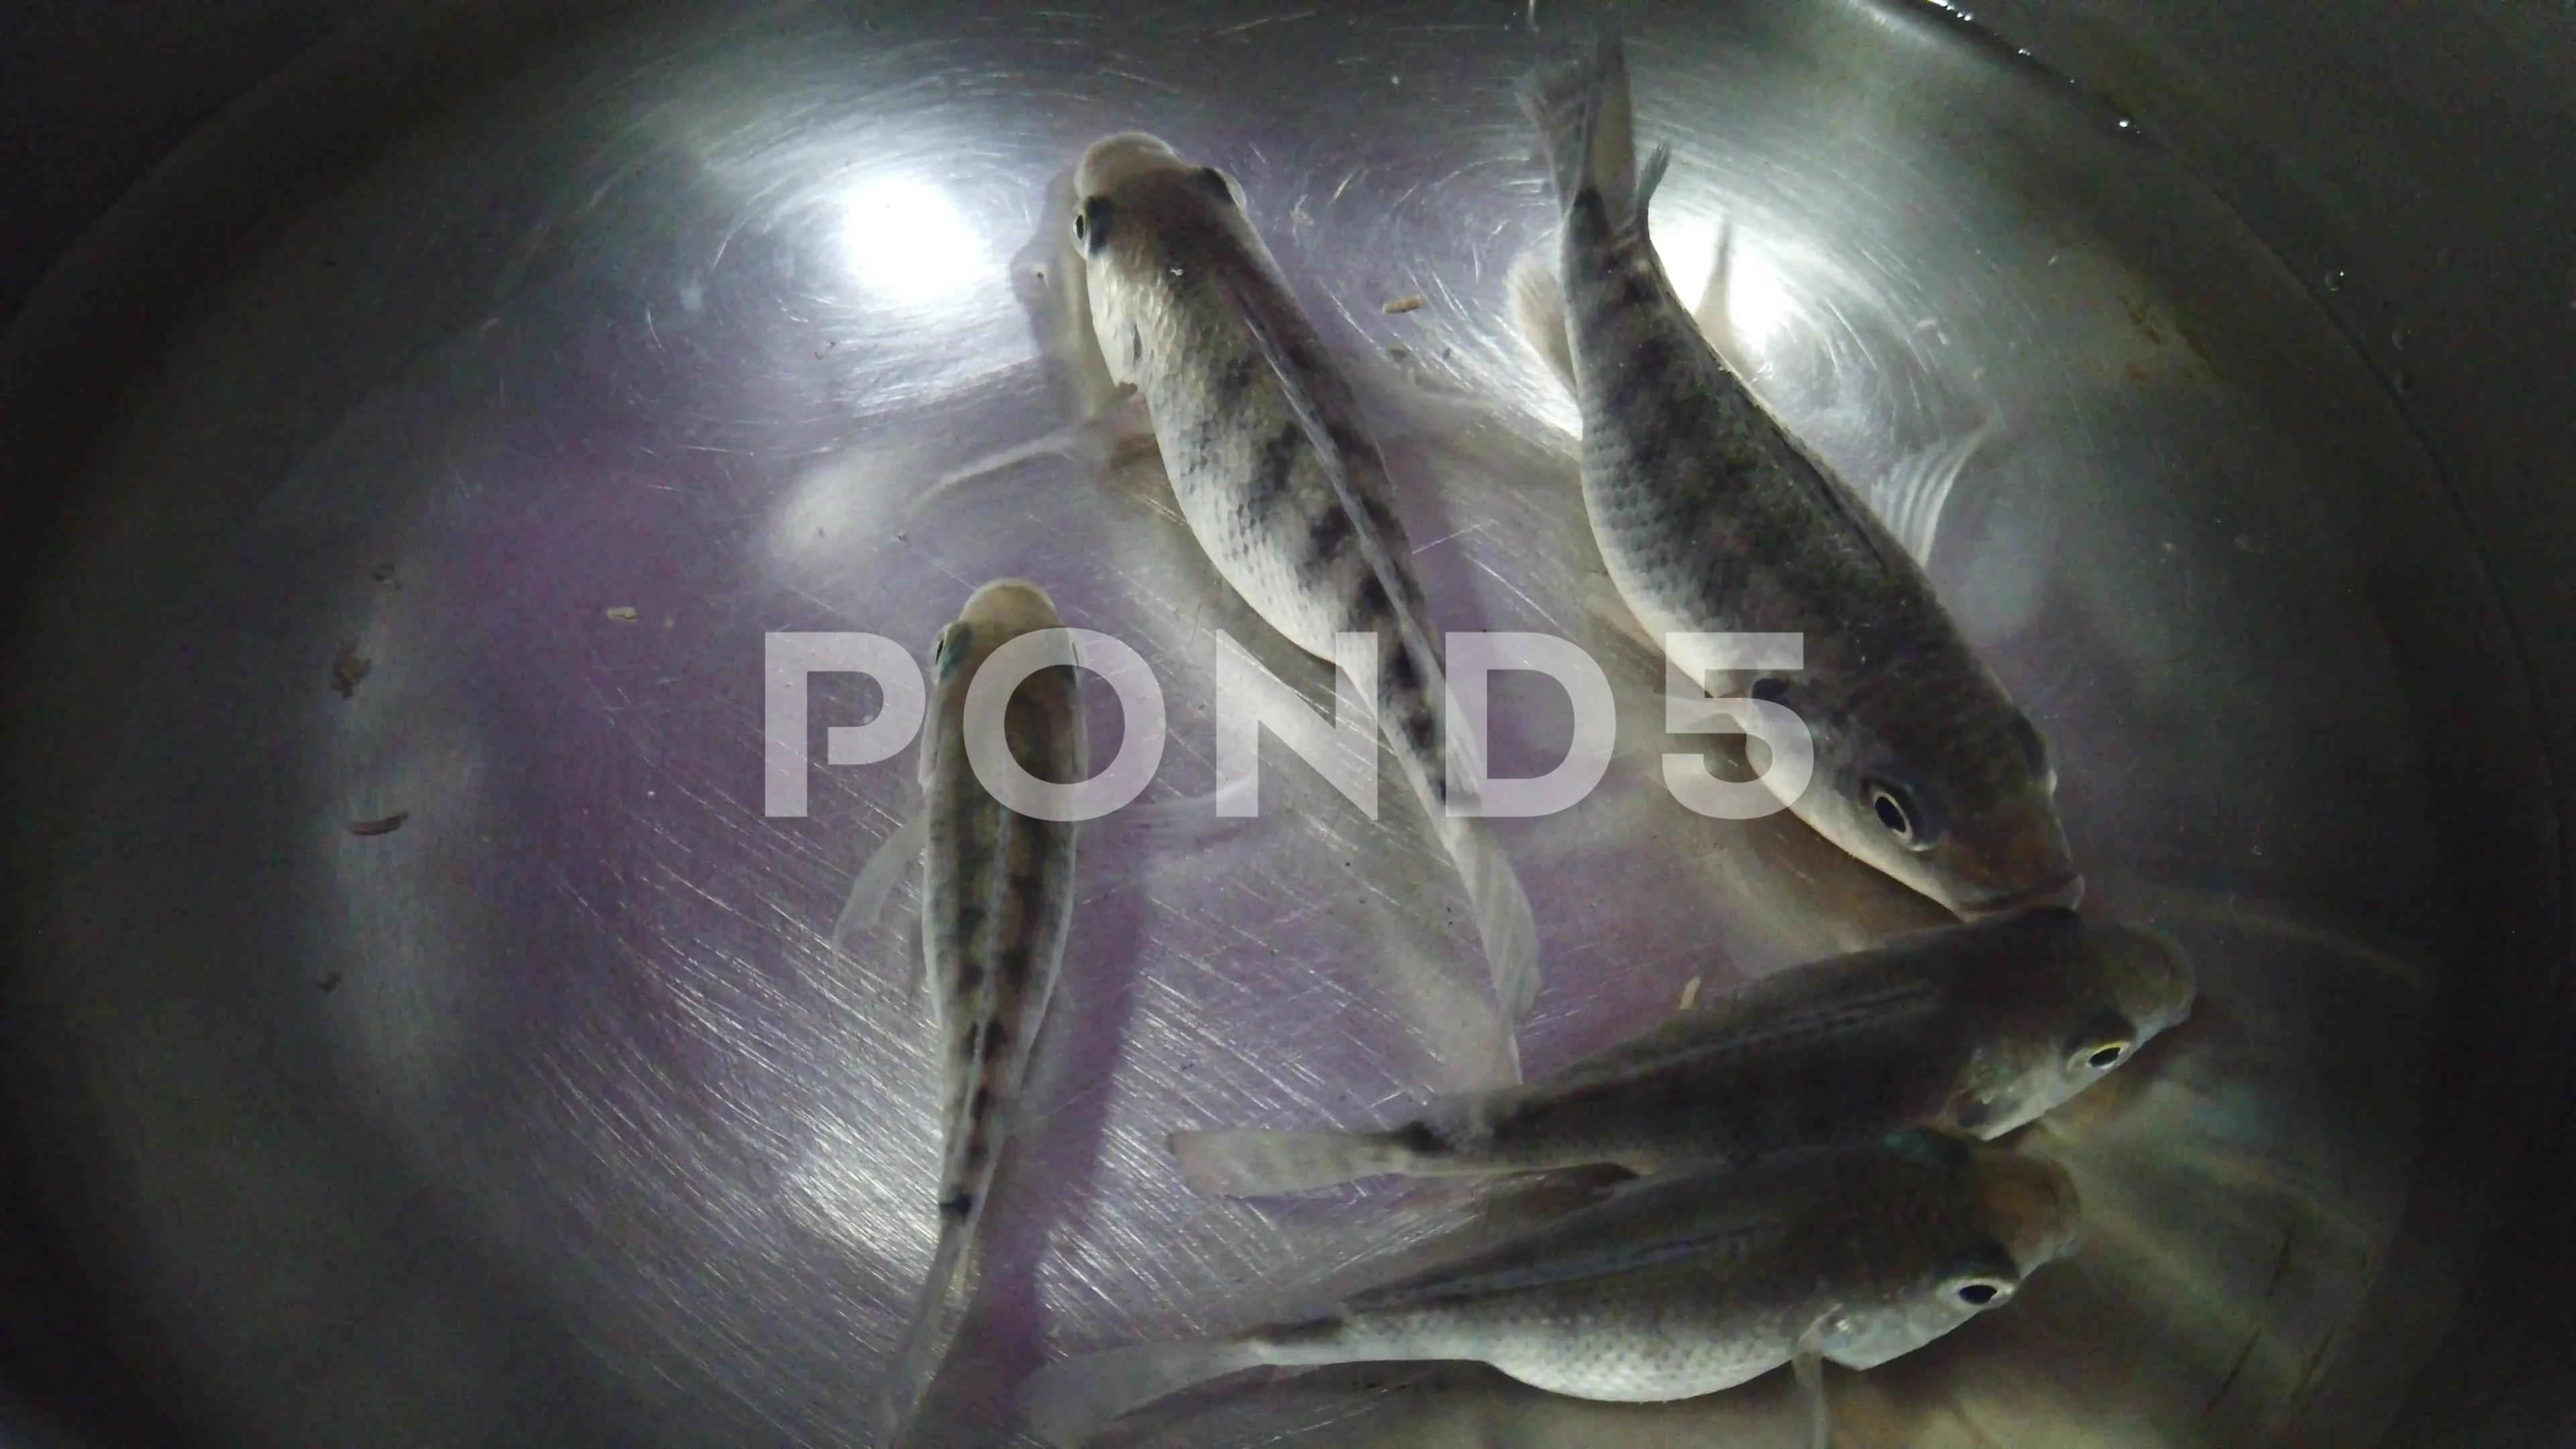 hybrid GIFT tilapia fish in hand, Stock Video